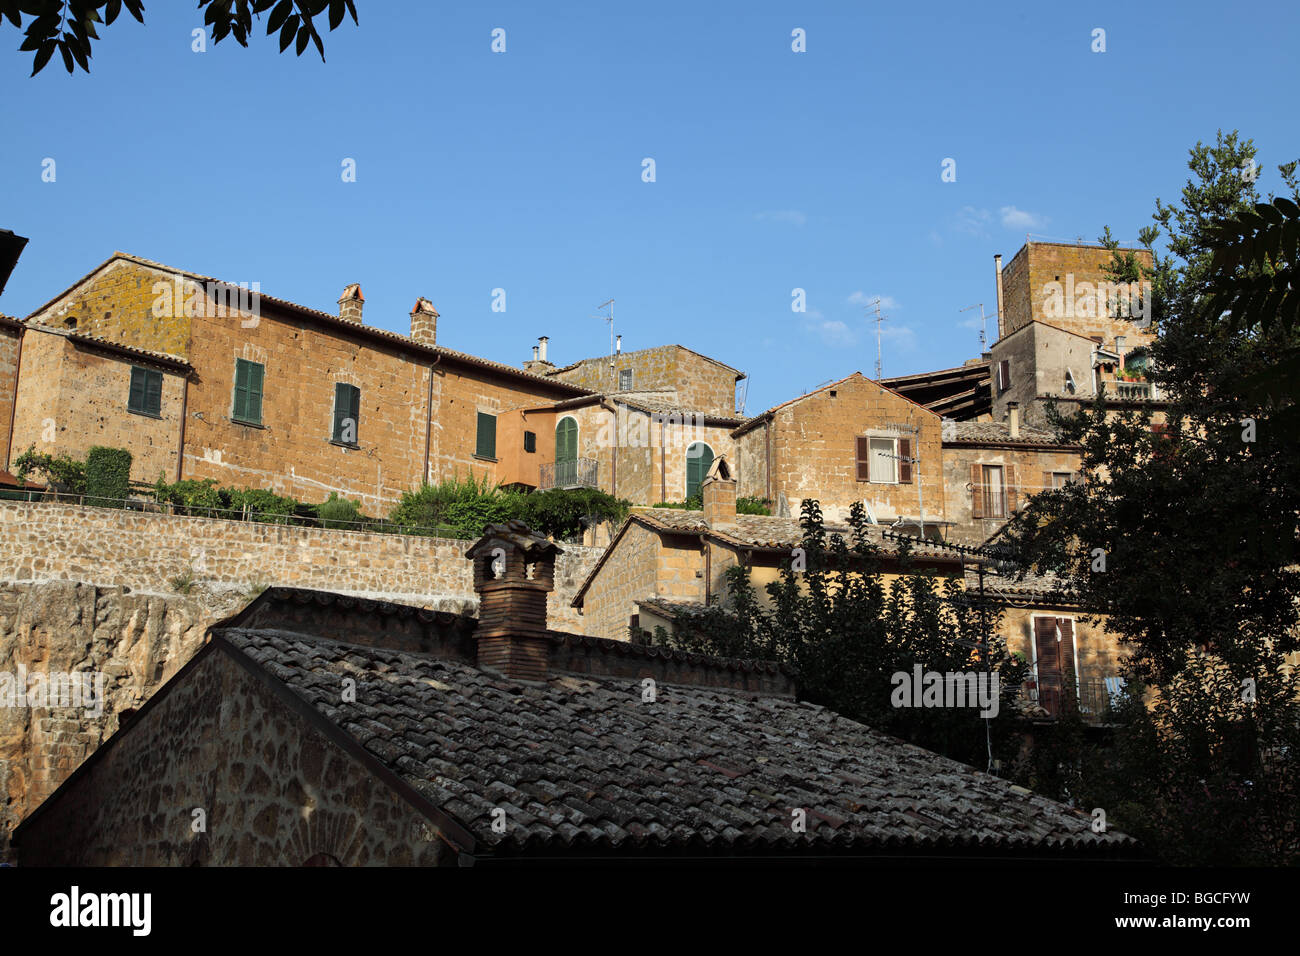 The Olmo Quarter at Orvieto Stock Photo - Alamy